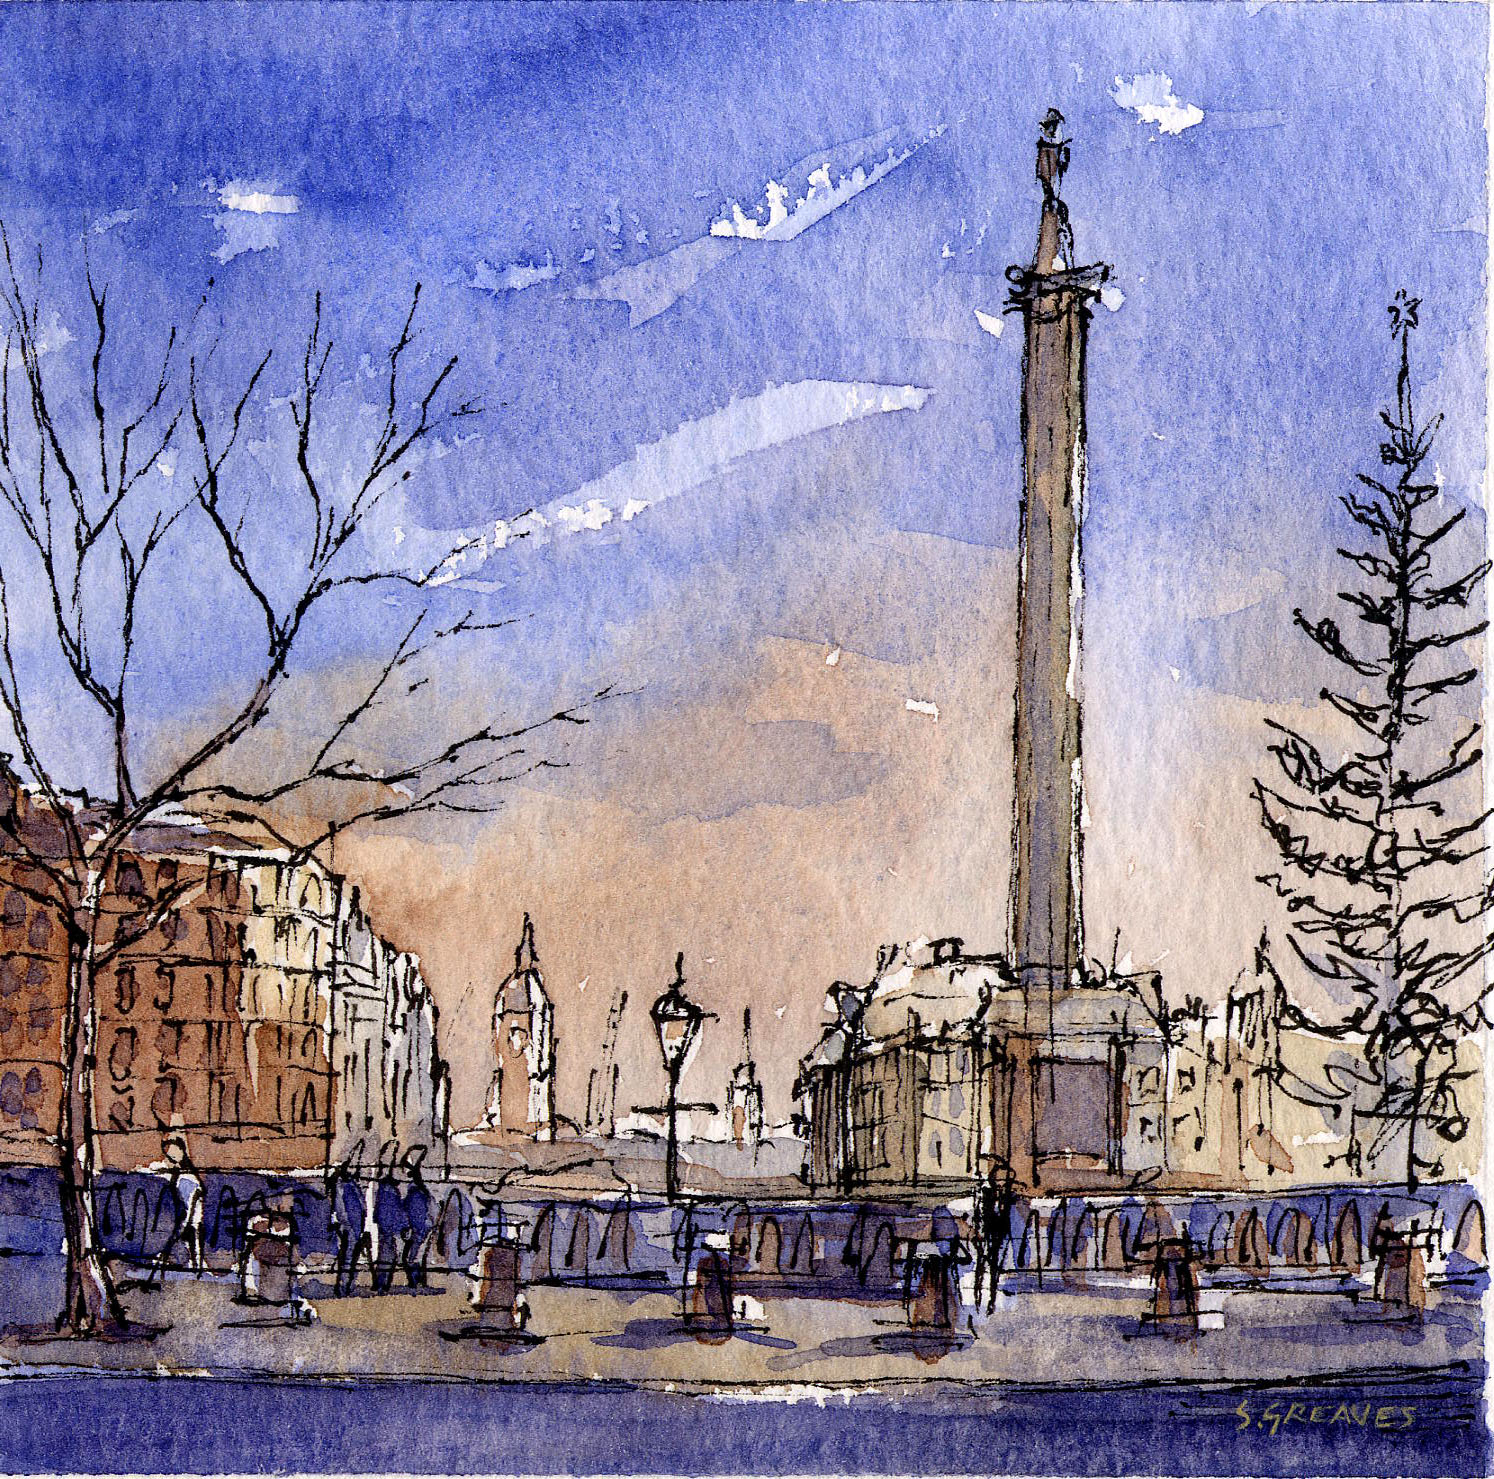 Steve Greaves - Trafalgar Square - landscape painting in ink & watercolour